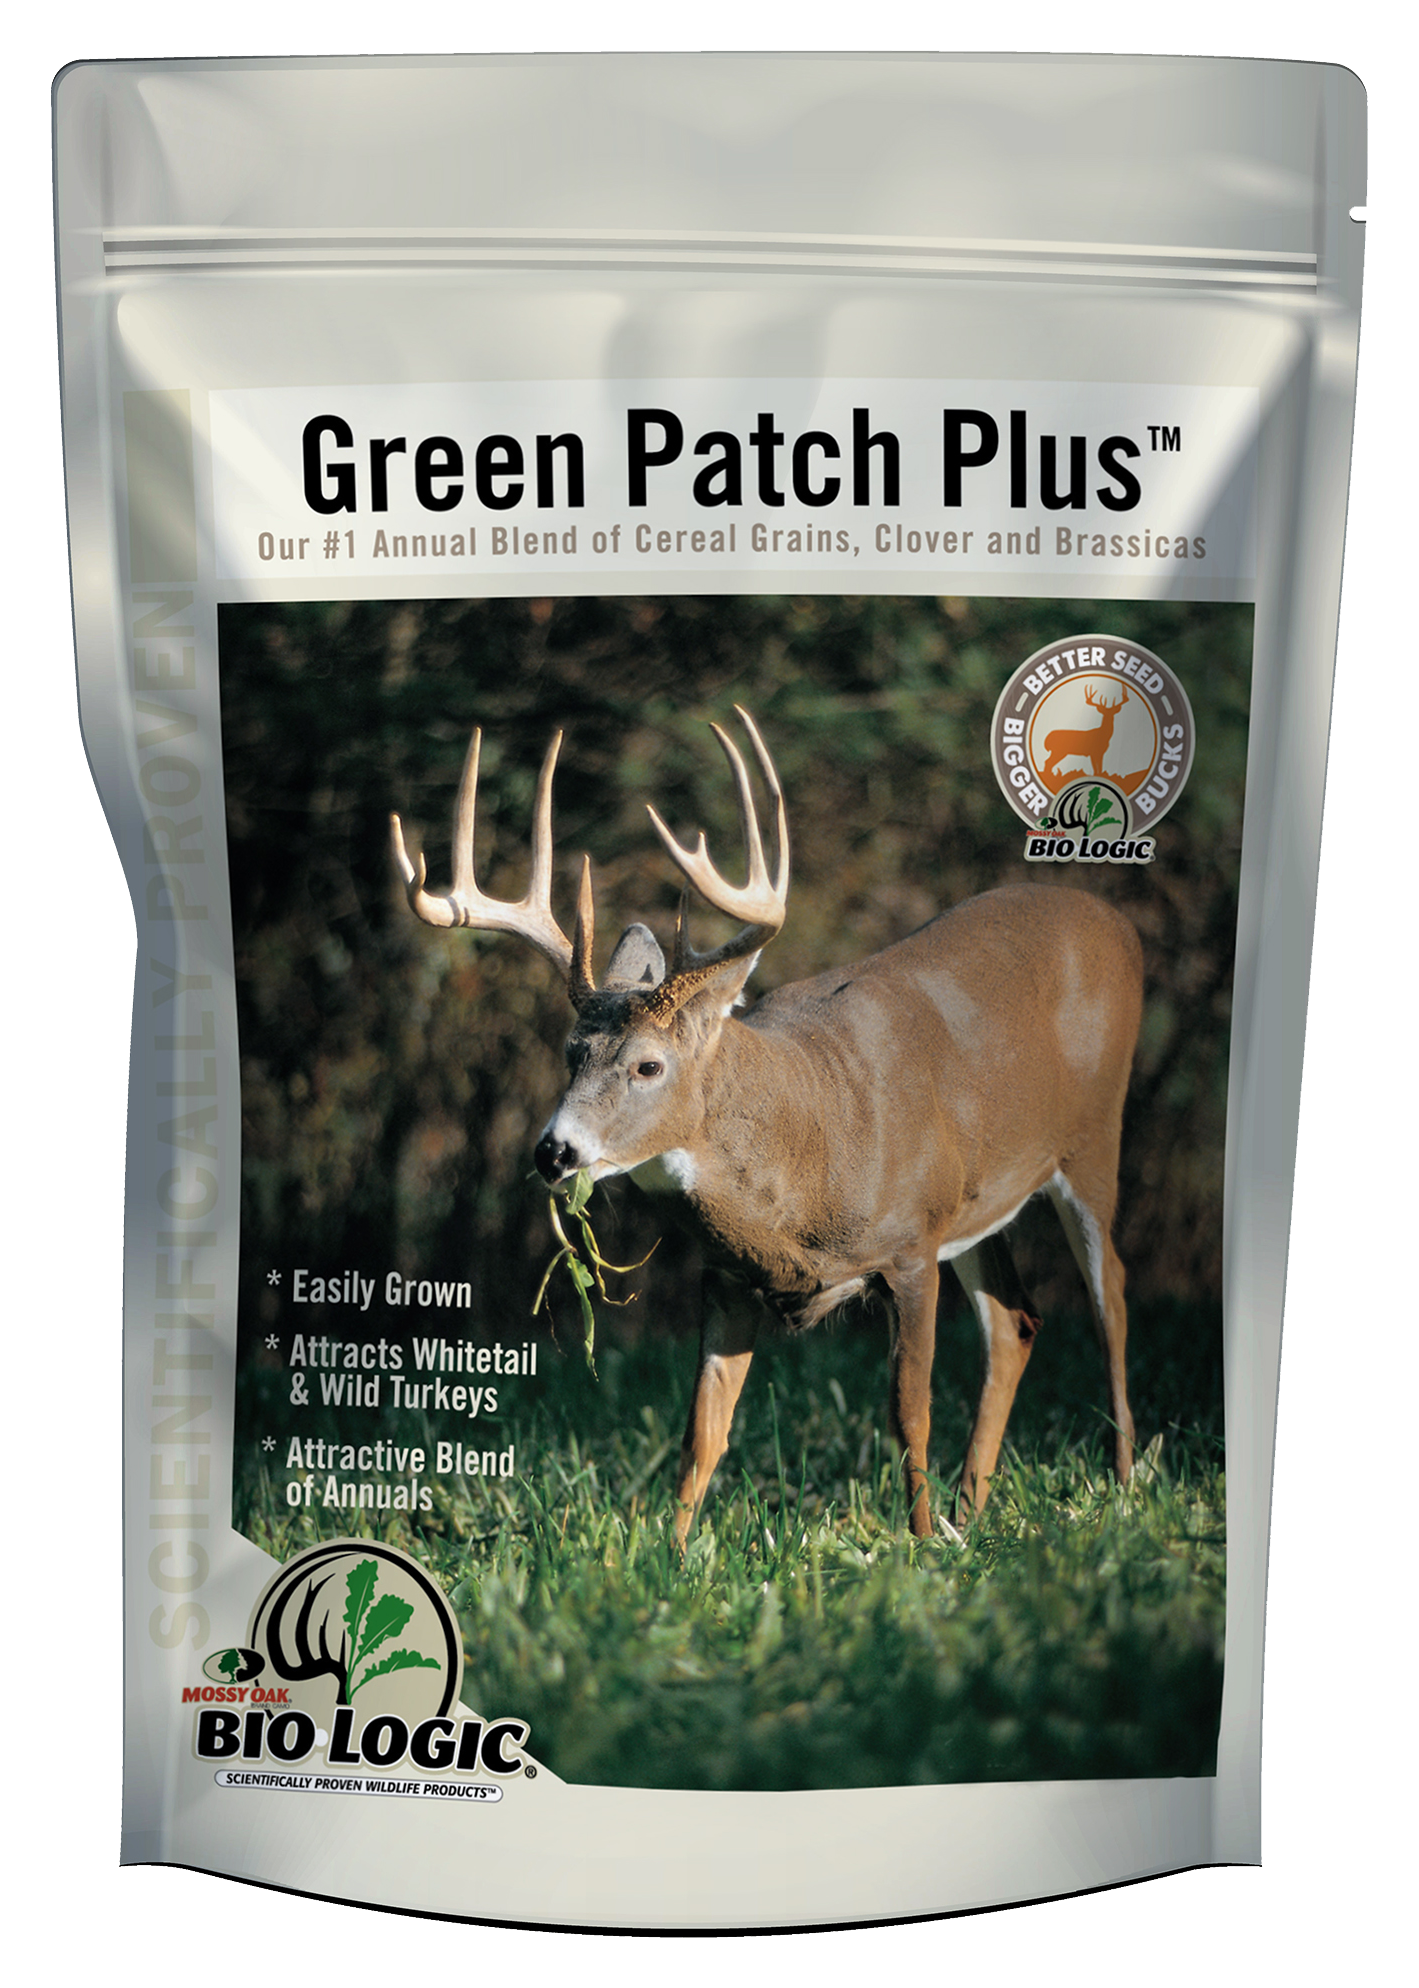 Mossy Oak BioLogic Green Patch Plus Game Seed for Deer | Bass Pro Shops